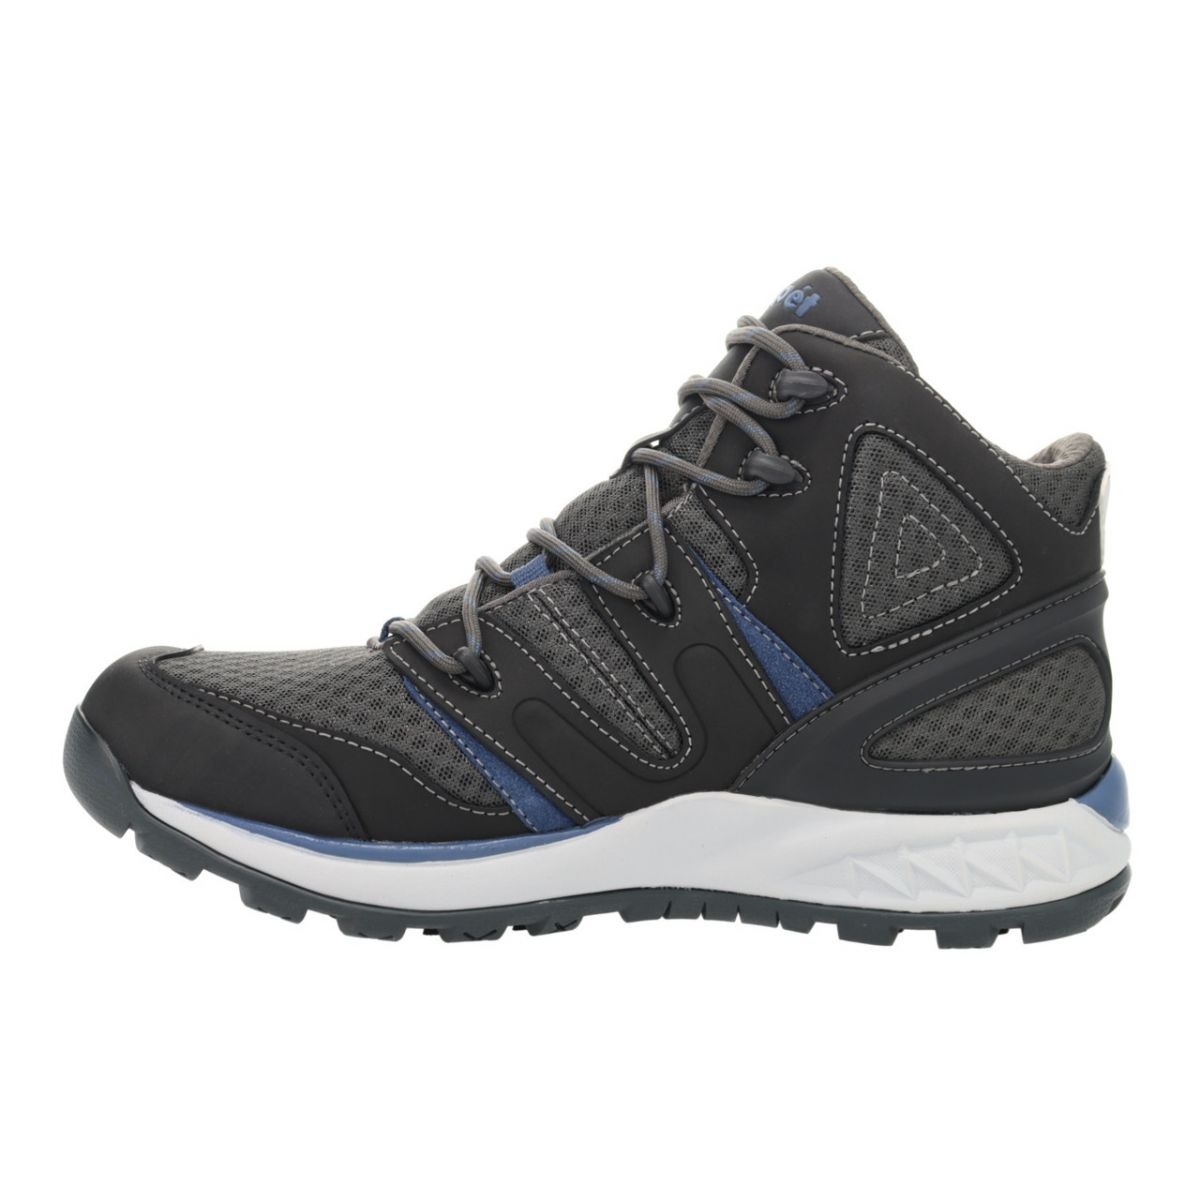 Propet Men's Veymont Waterproof Hiking Boot Grey/Blue - MOA022SGRB GREY/BLUE - GREY/BLUE, 8